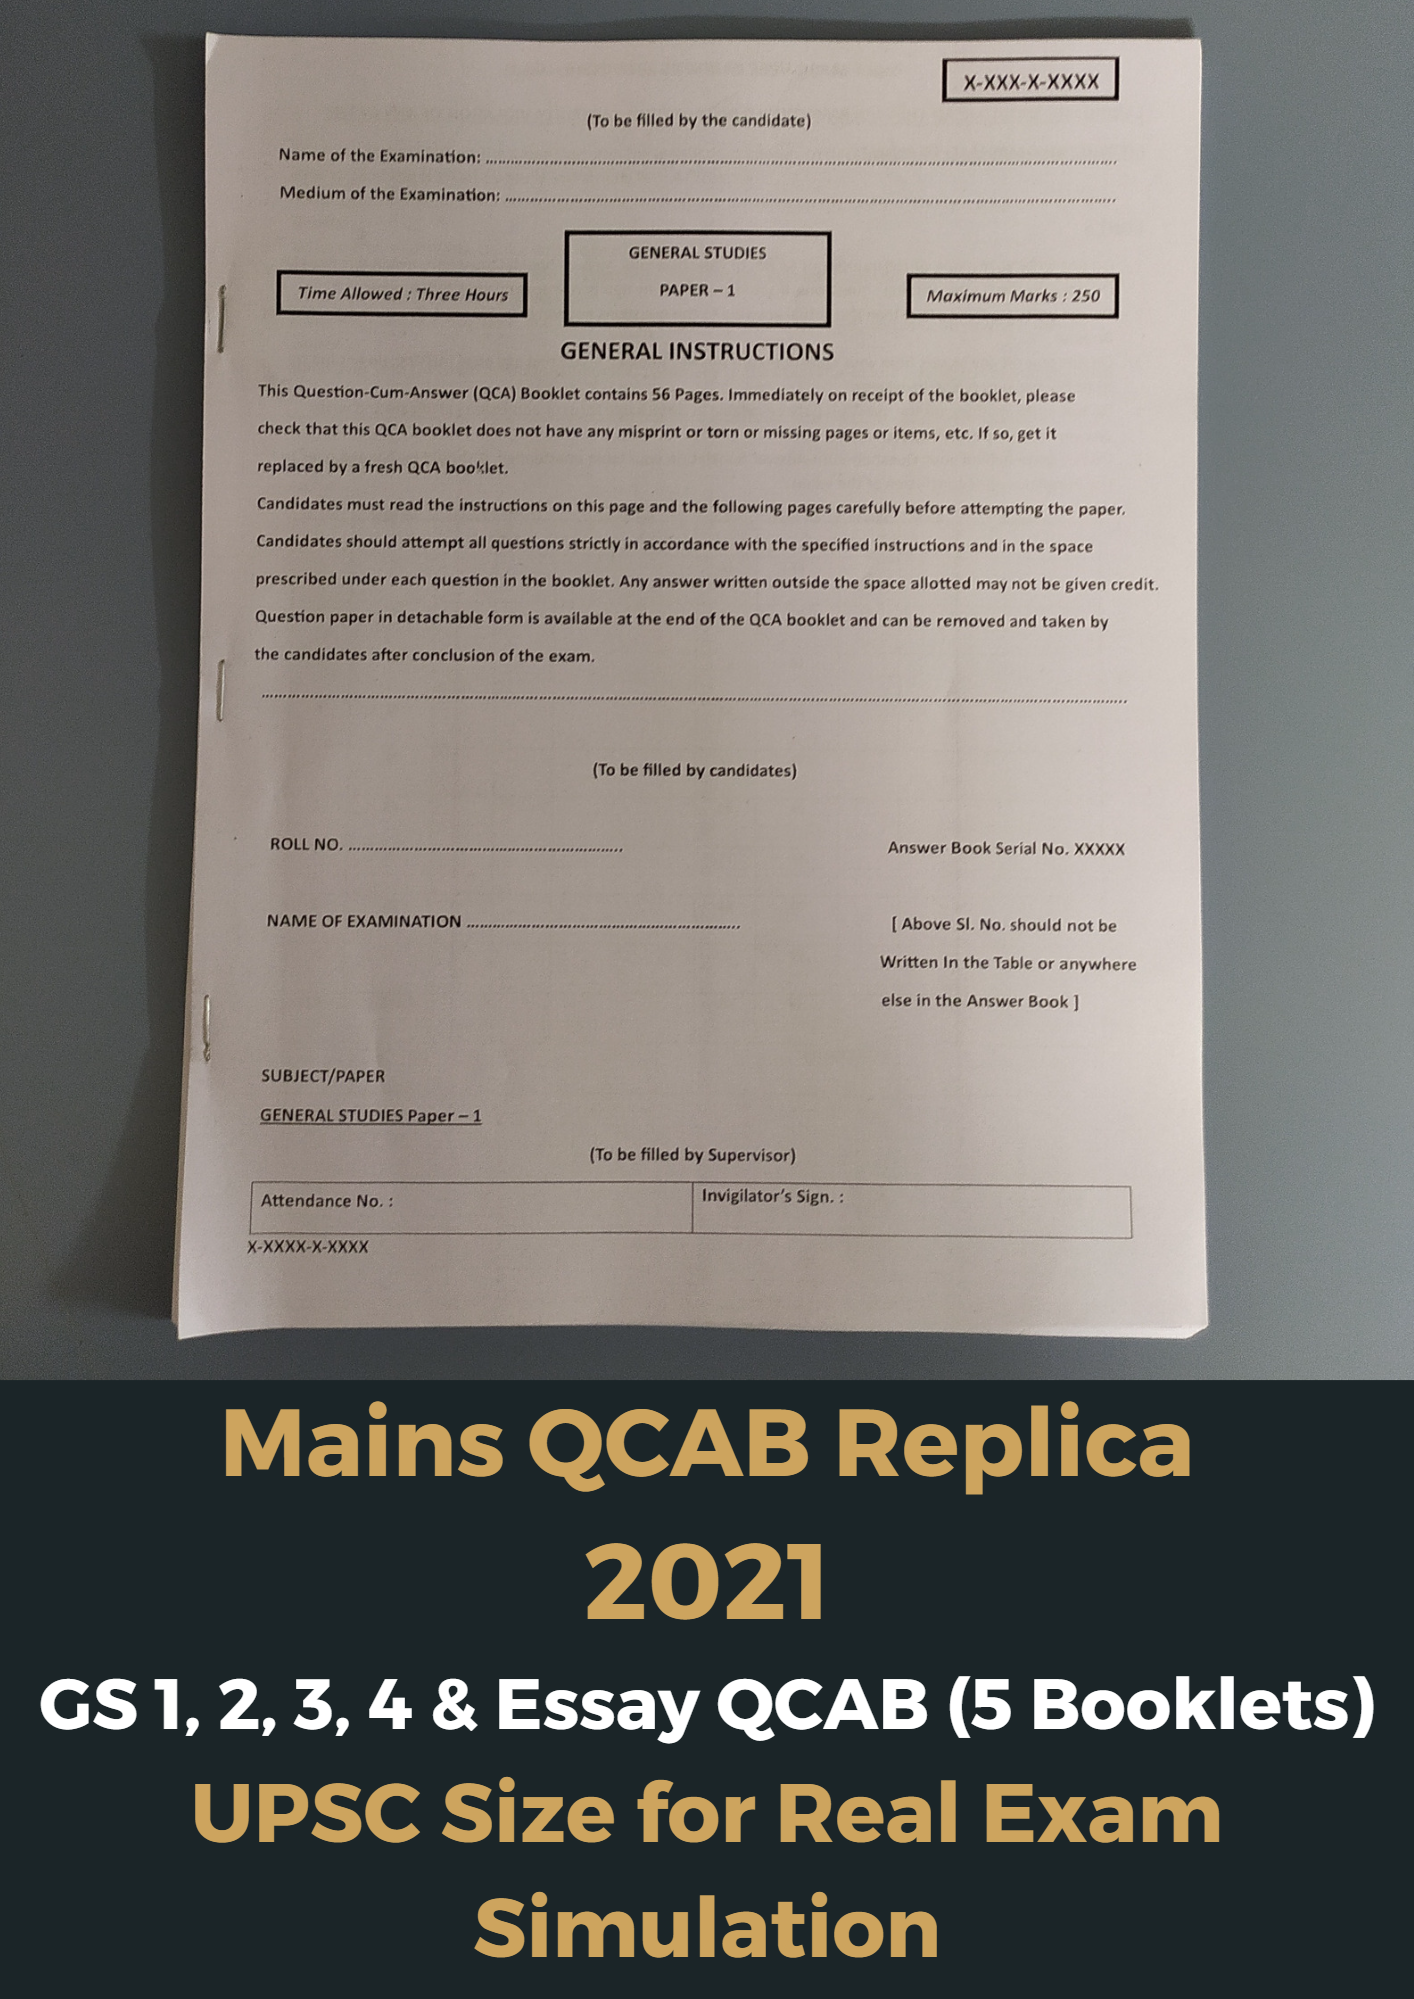 2021 Mains QCAB Replica - GS 1,2,3,4 & Essay (5 Booklets) - UPSC QCAB Size - For Real Exam Simulation